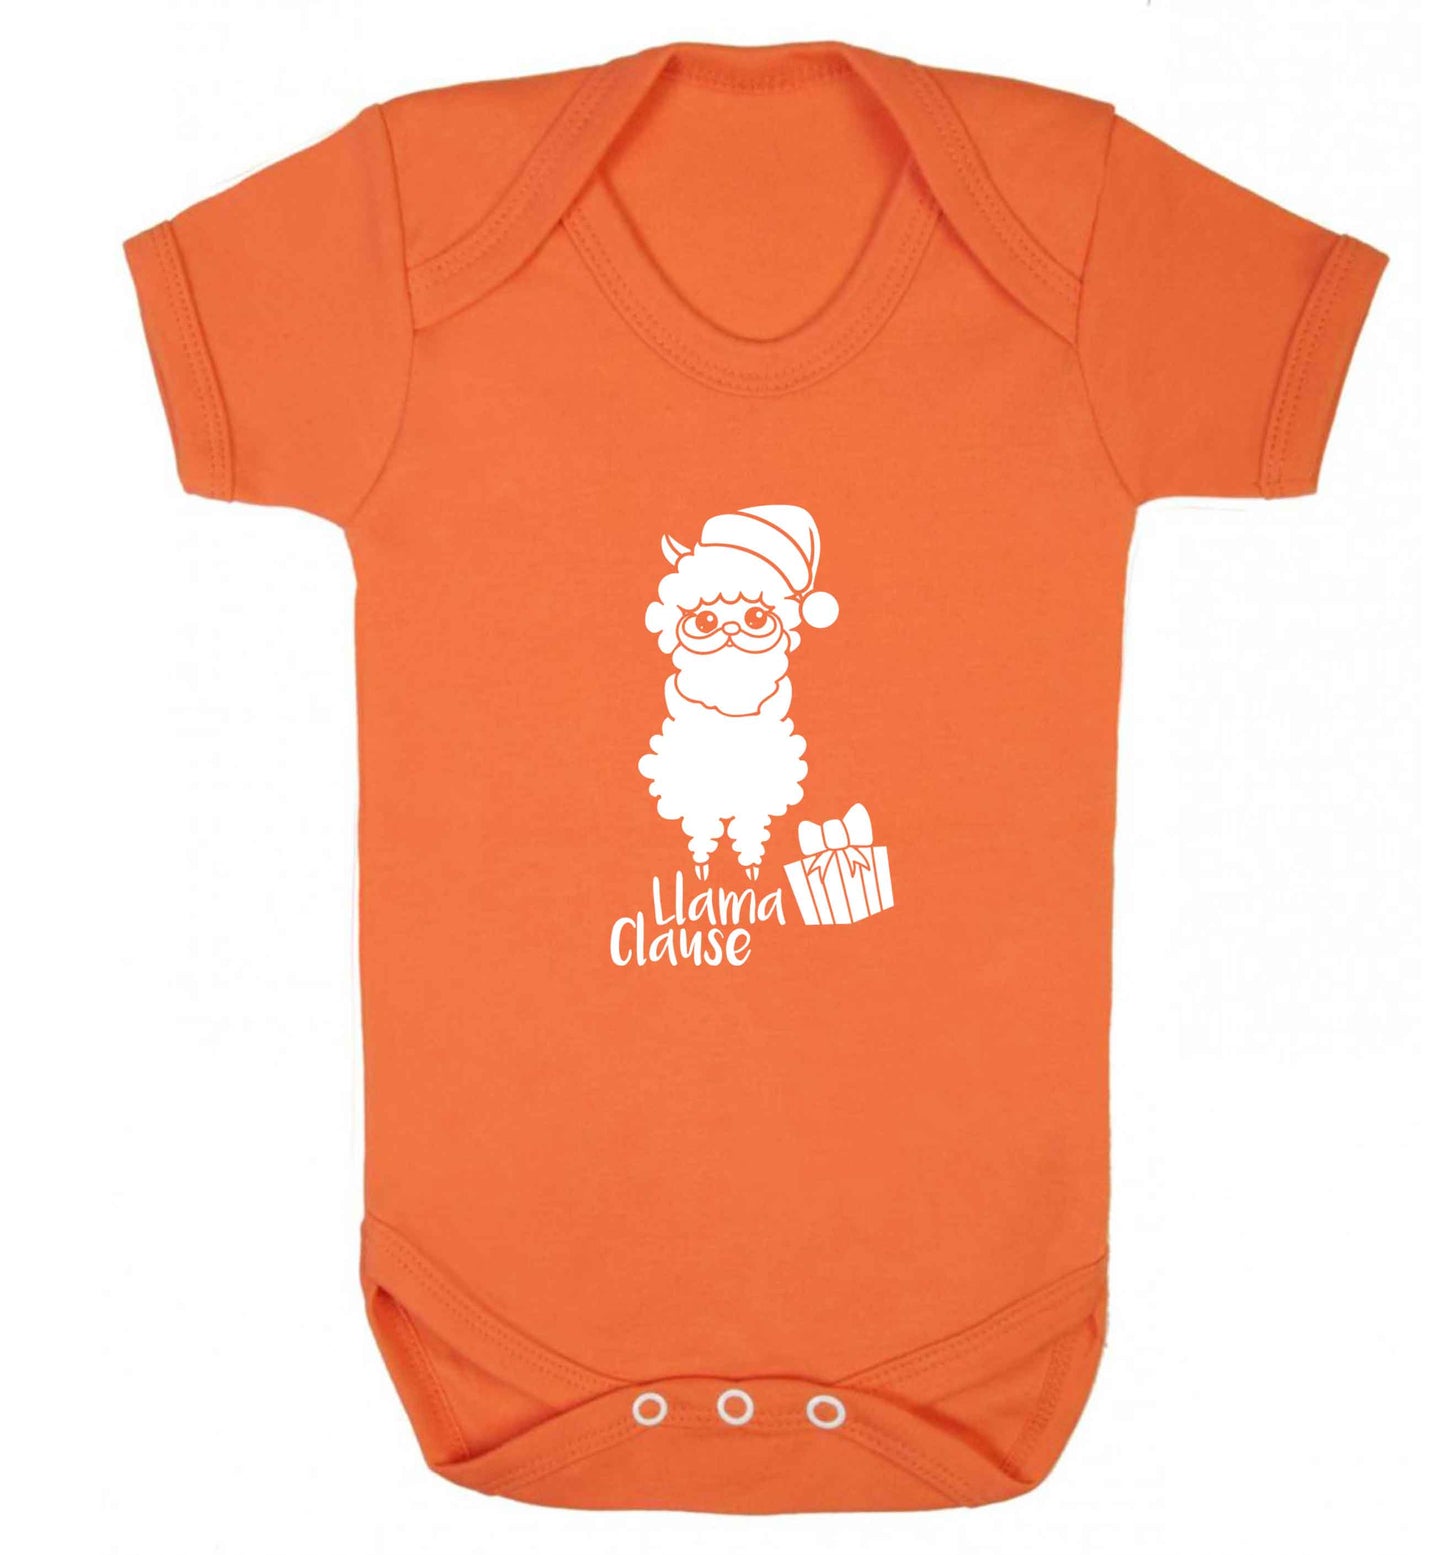 Llama Clause baby vest orange 18-24 months